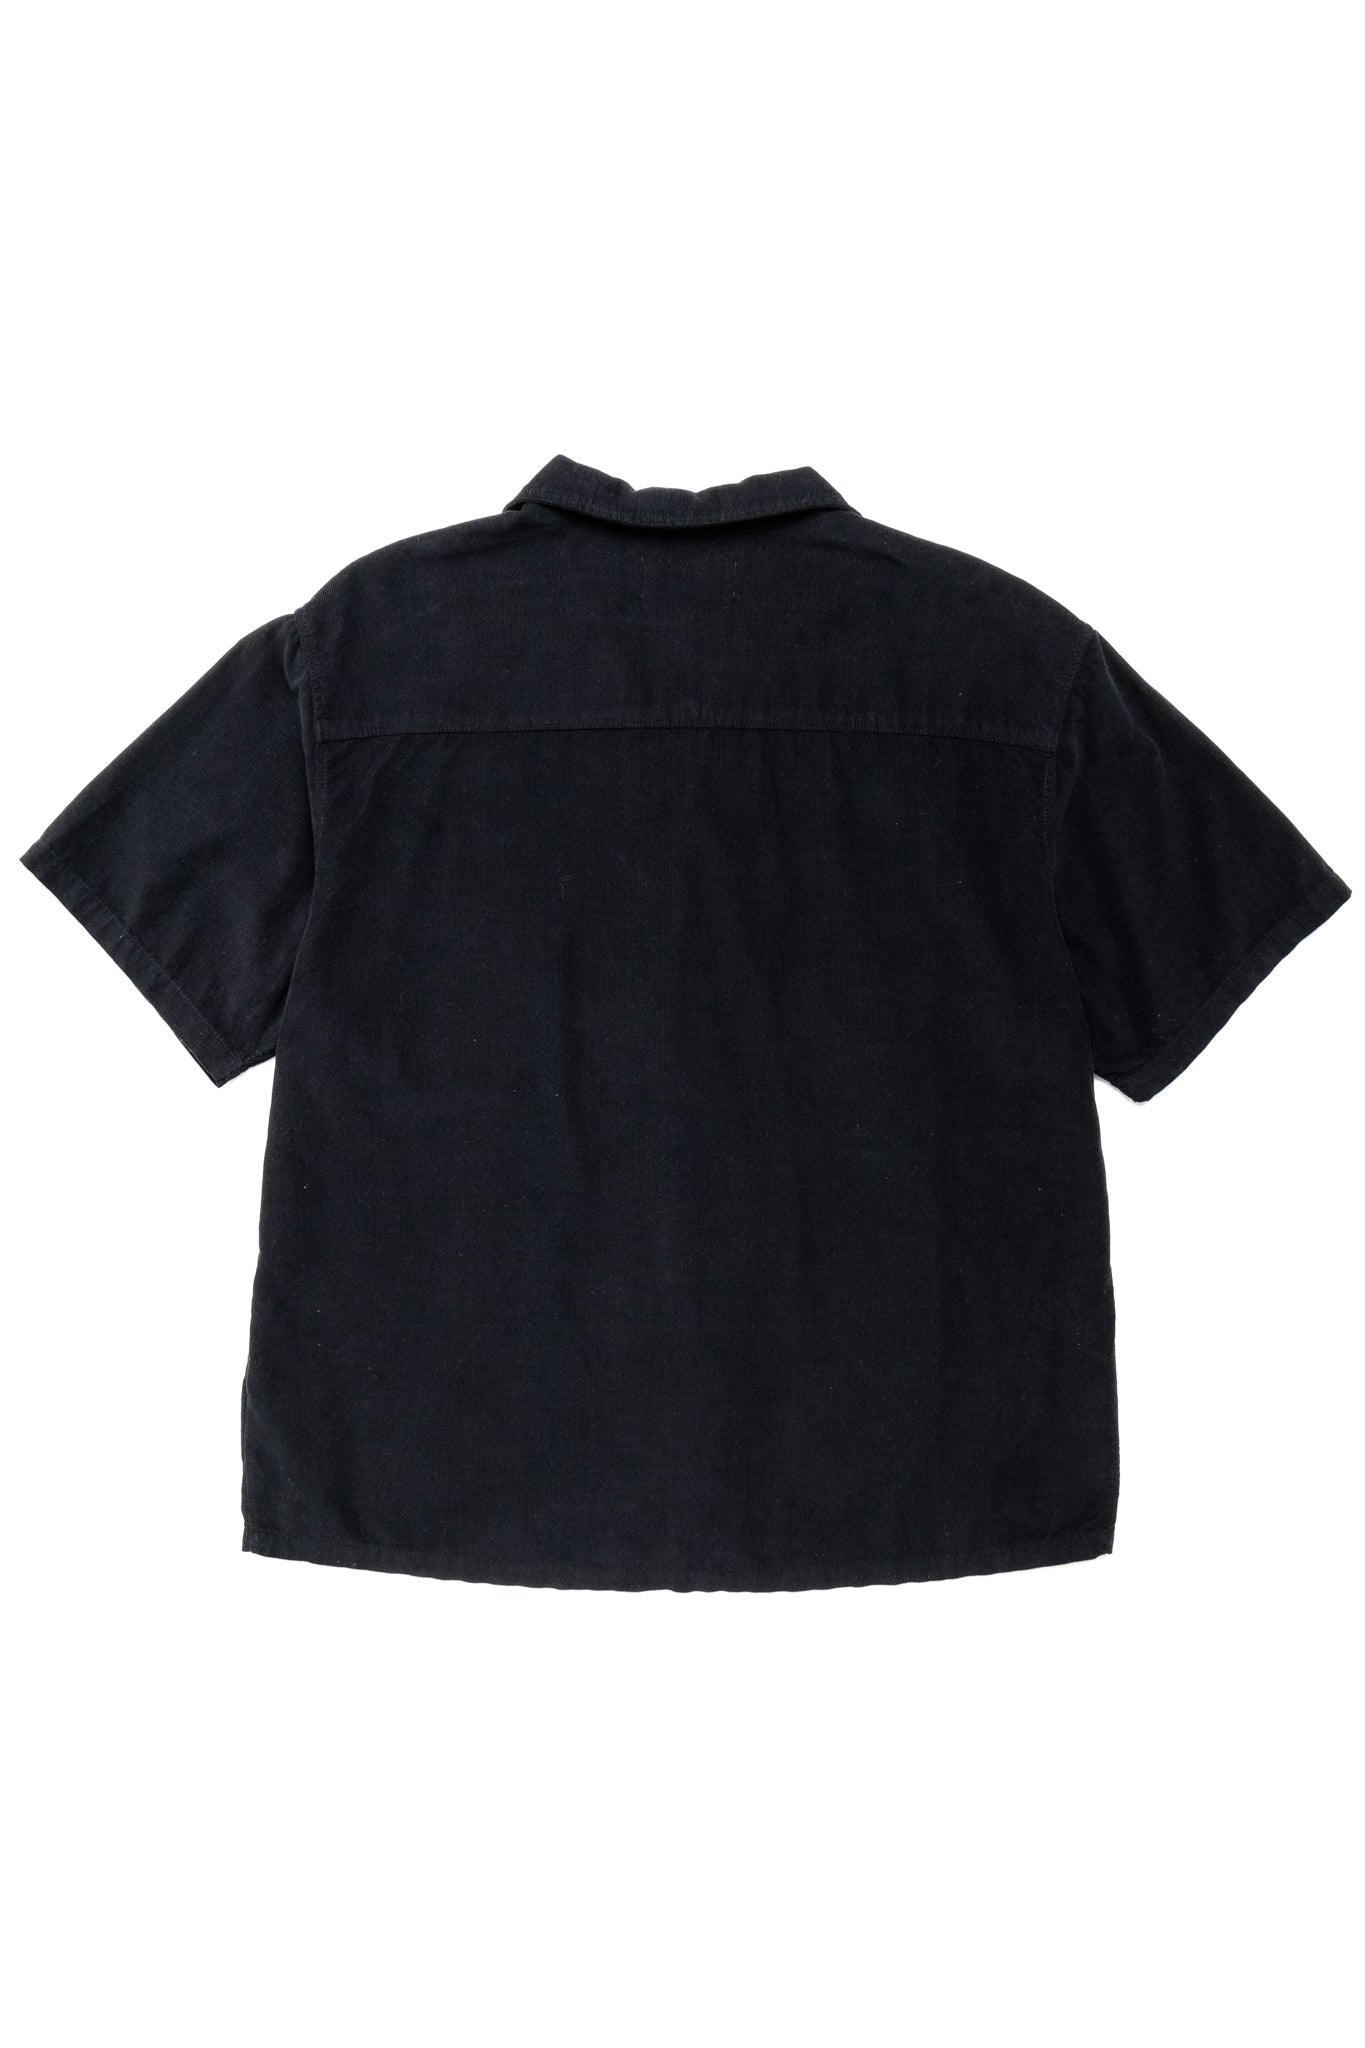 S/S Cuban Shirt - Black